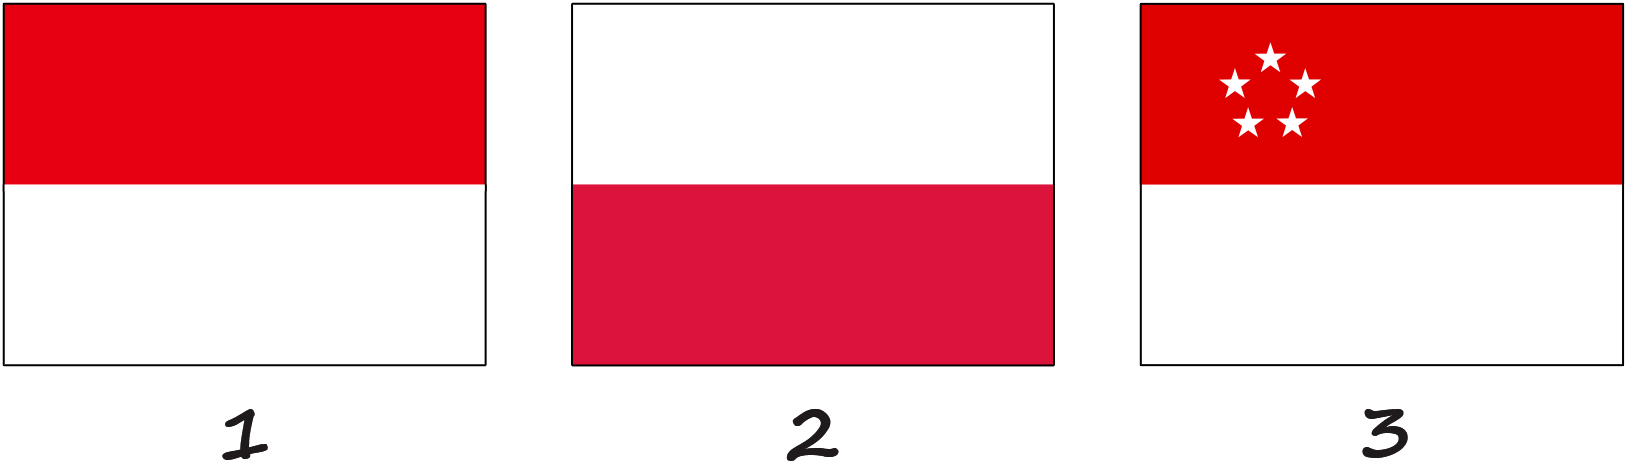 Similar flags to the flag of Monaco